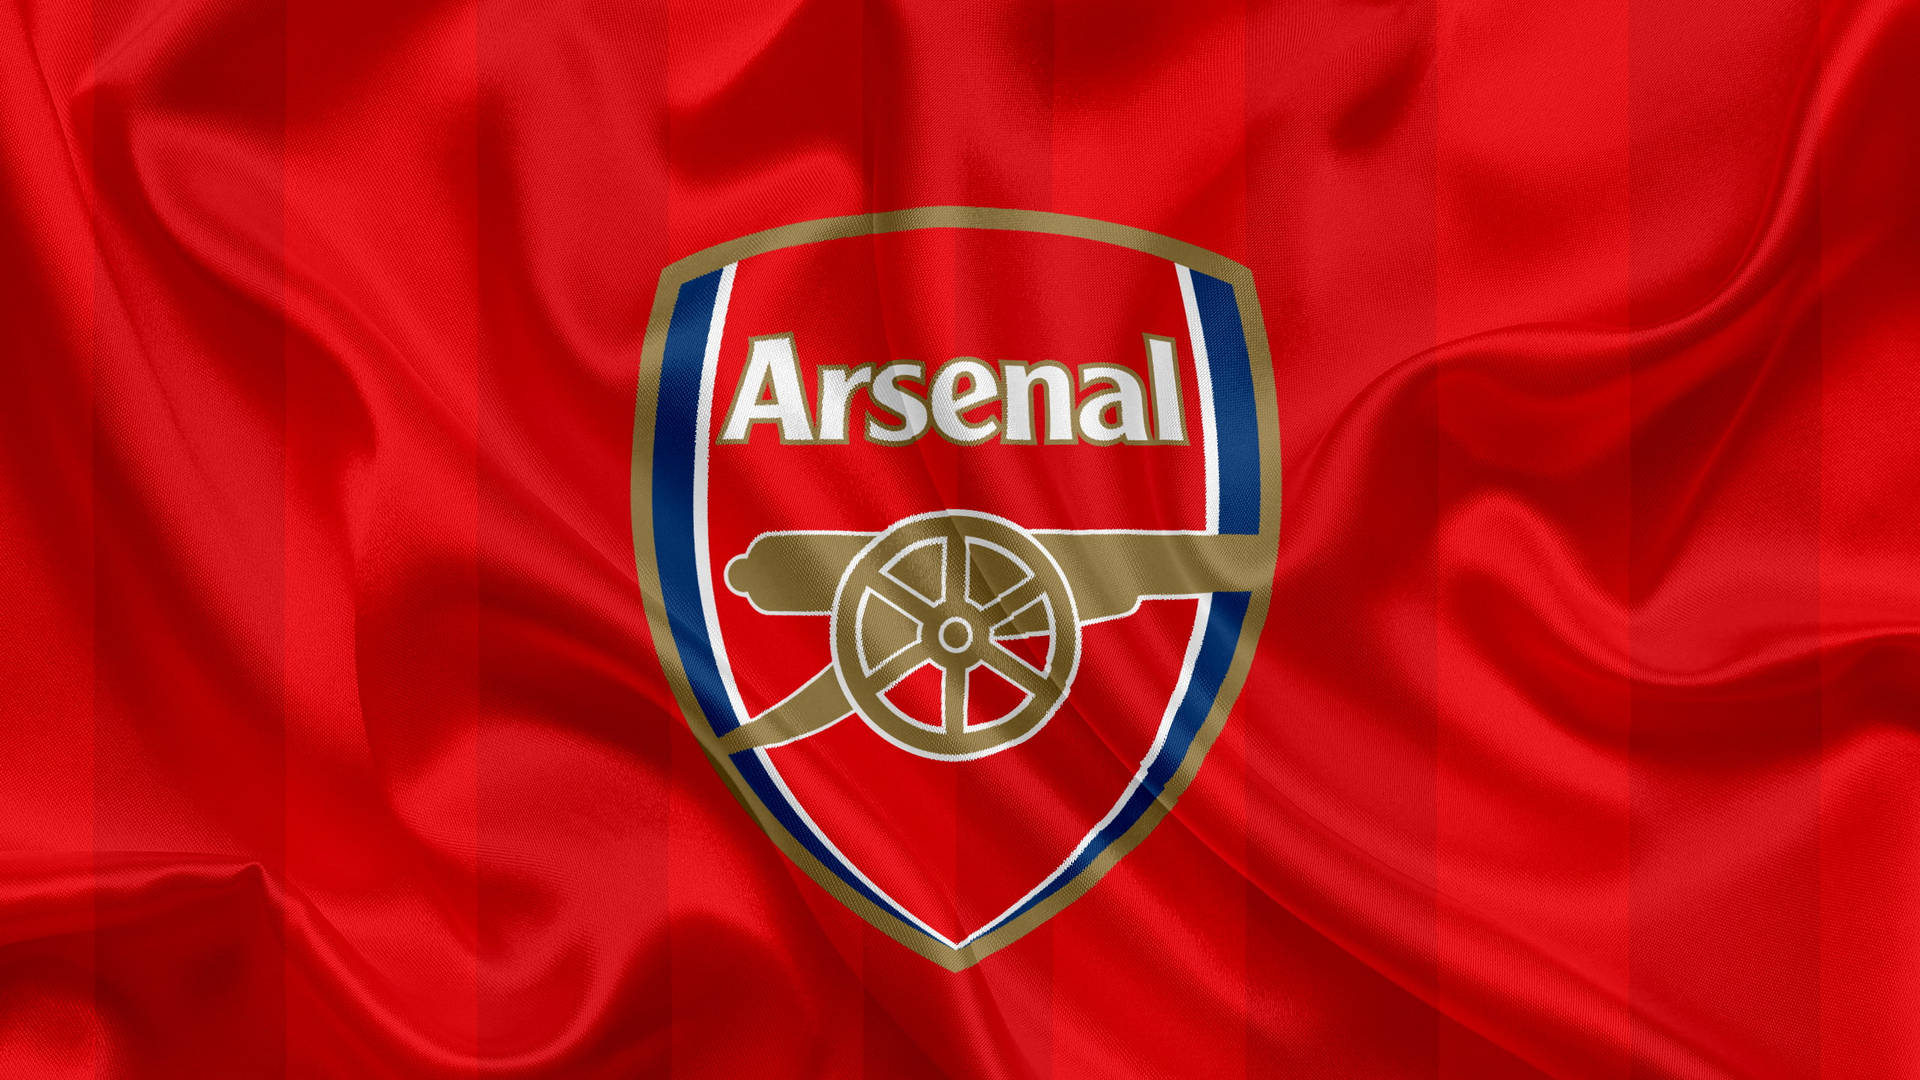 Arsenal Flag On Red Silk